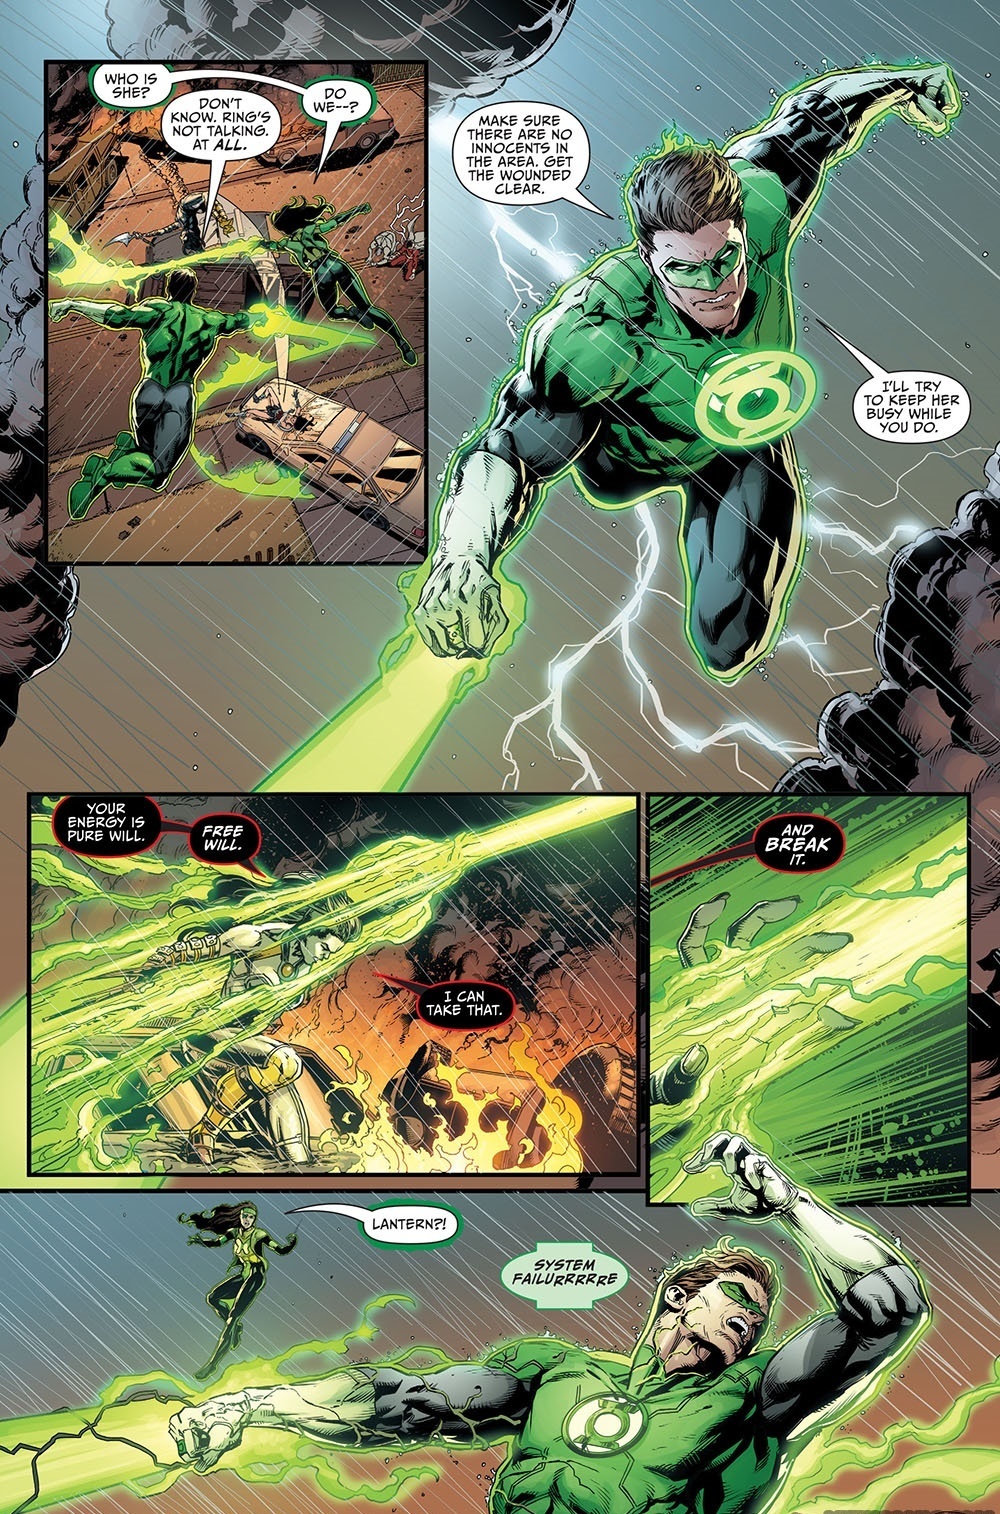 Justice League #41 - Darkseid War Chapter One: God vs. Man